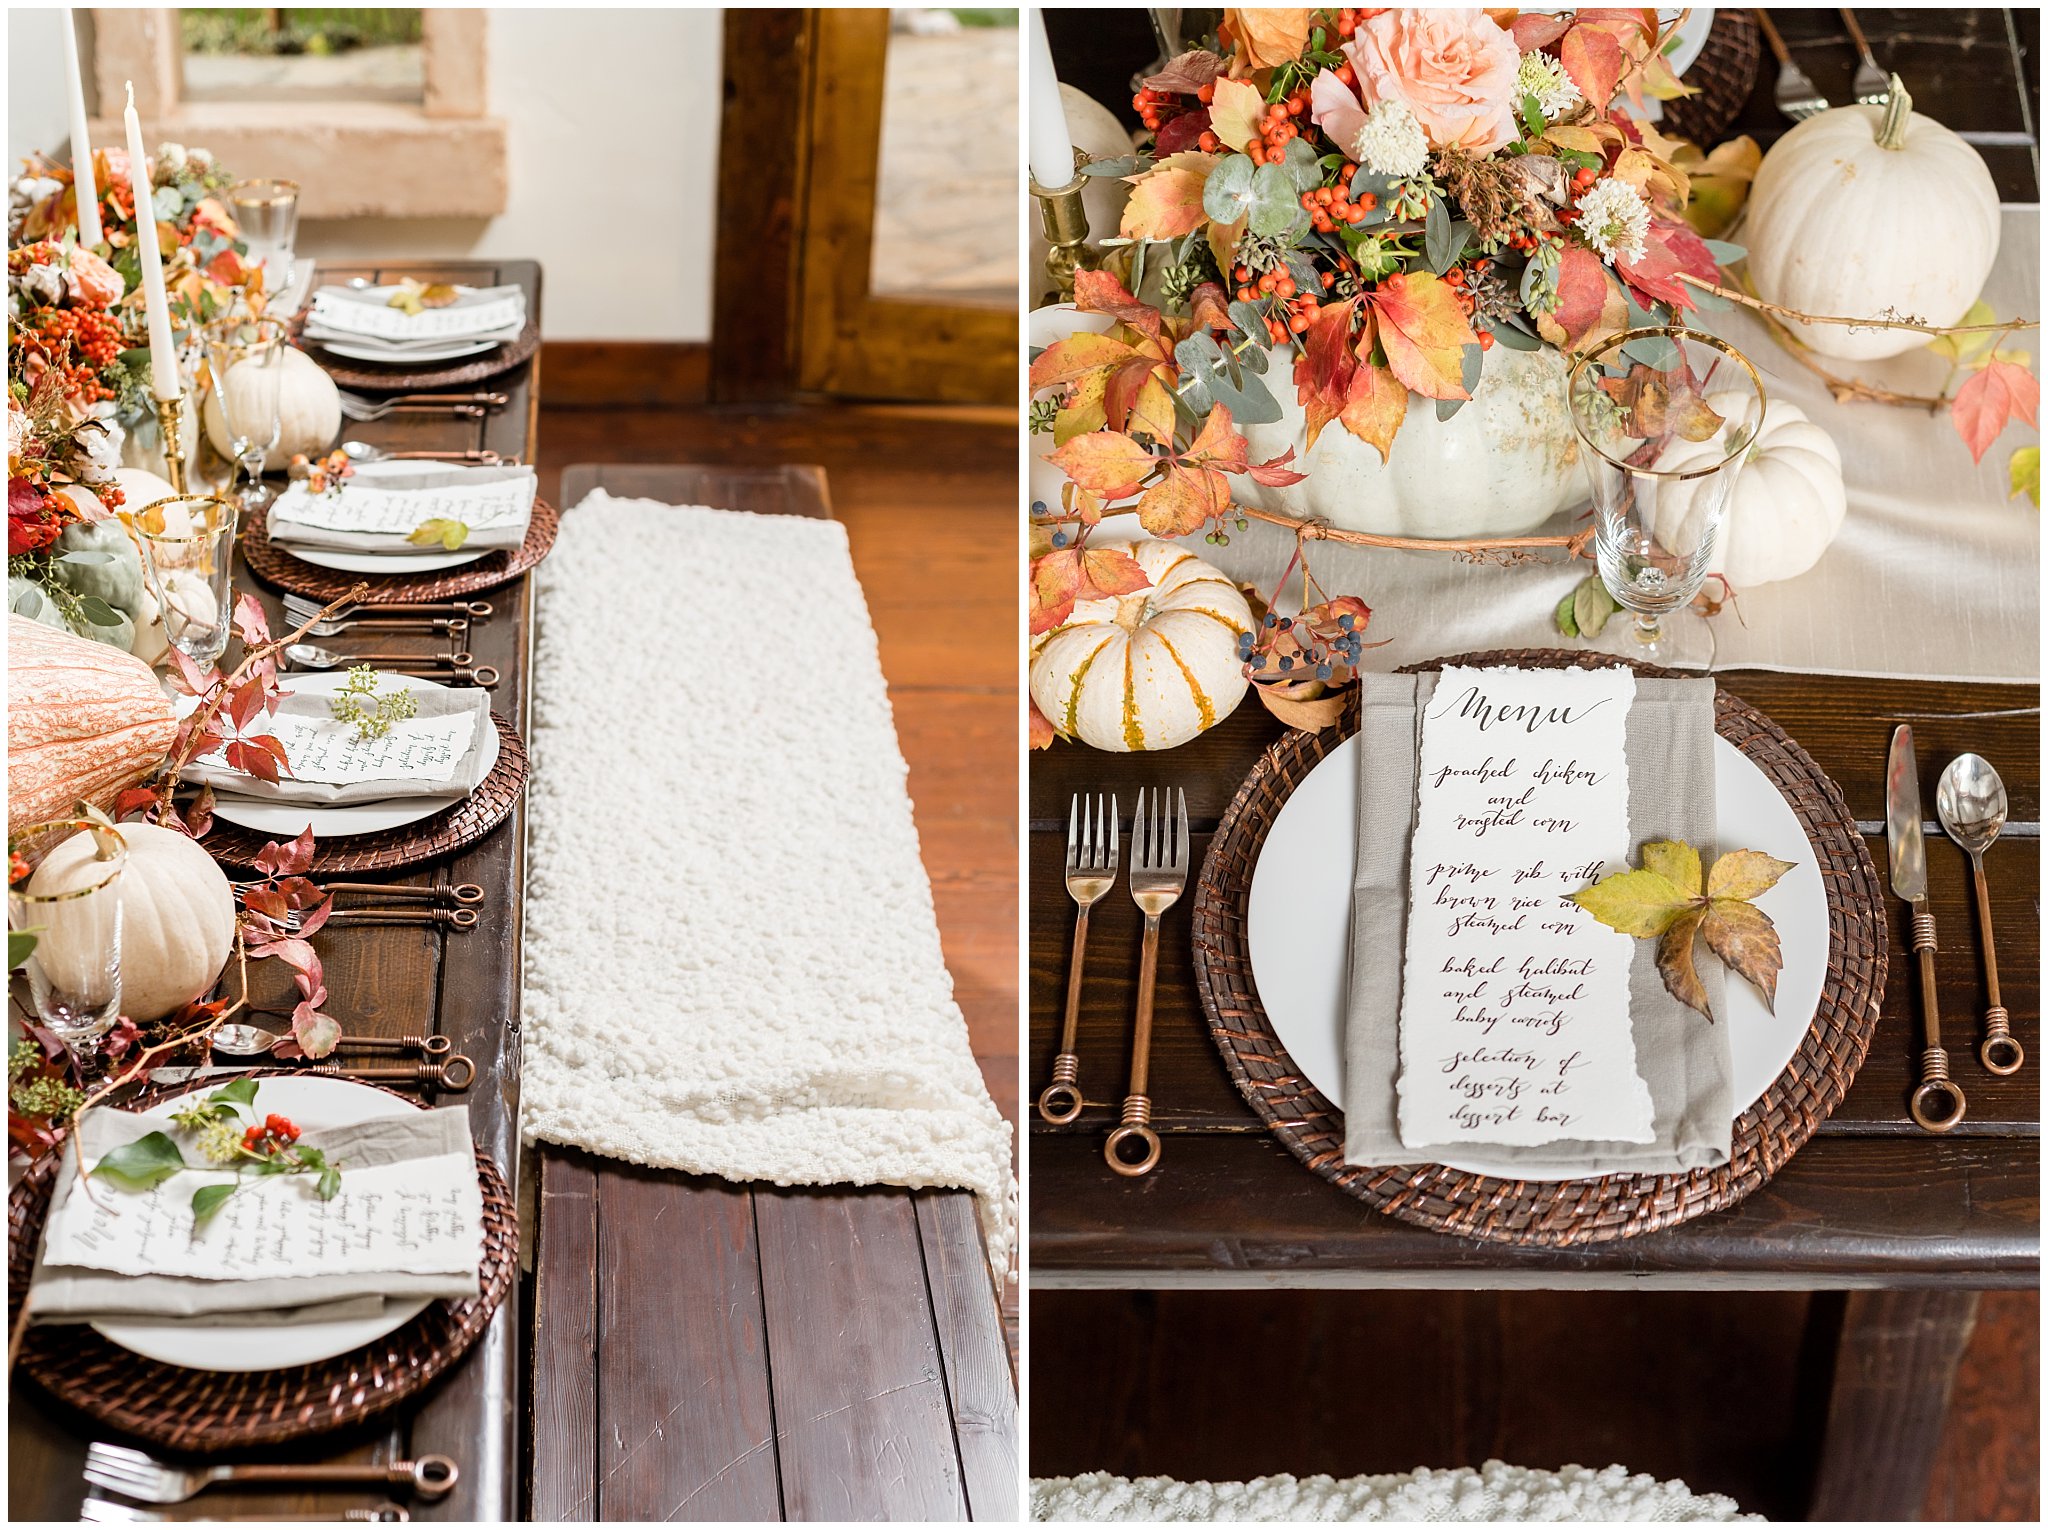 Dinner menu for fall wedding | Farmhouse table | Fall pumpkin and squash elegant wedding setup and table setting ideas | Wadley Farms Elegant Fall Utah Wedding | Jessie and Dallin Photography